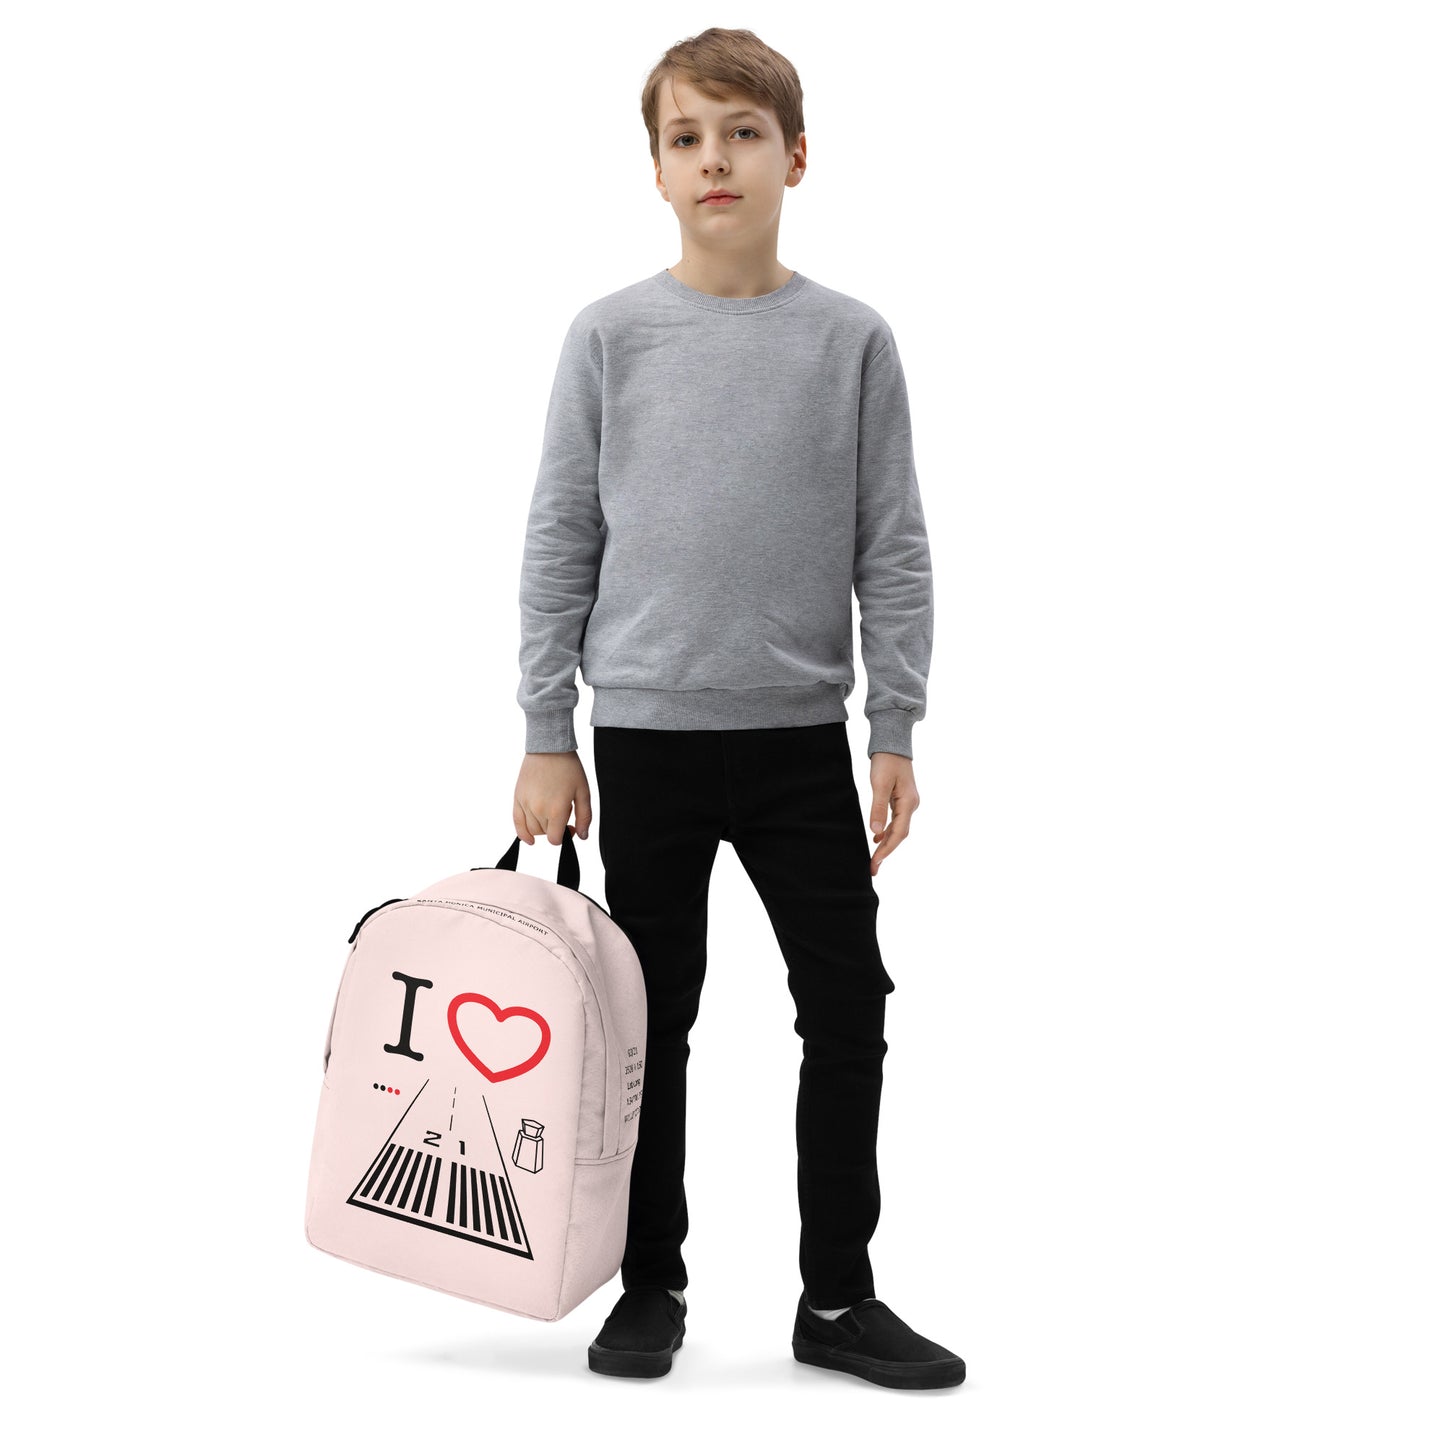 Santa Monica Airport Runway 21 - light pink minimalist backpack